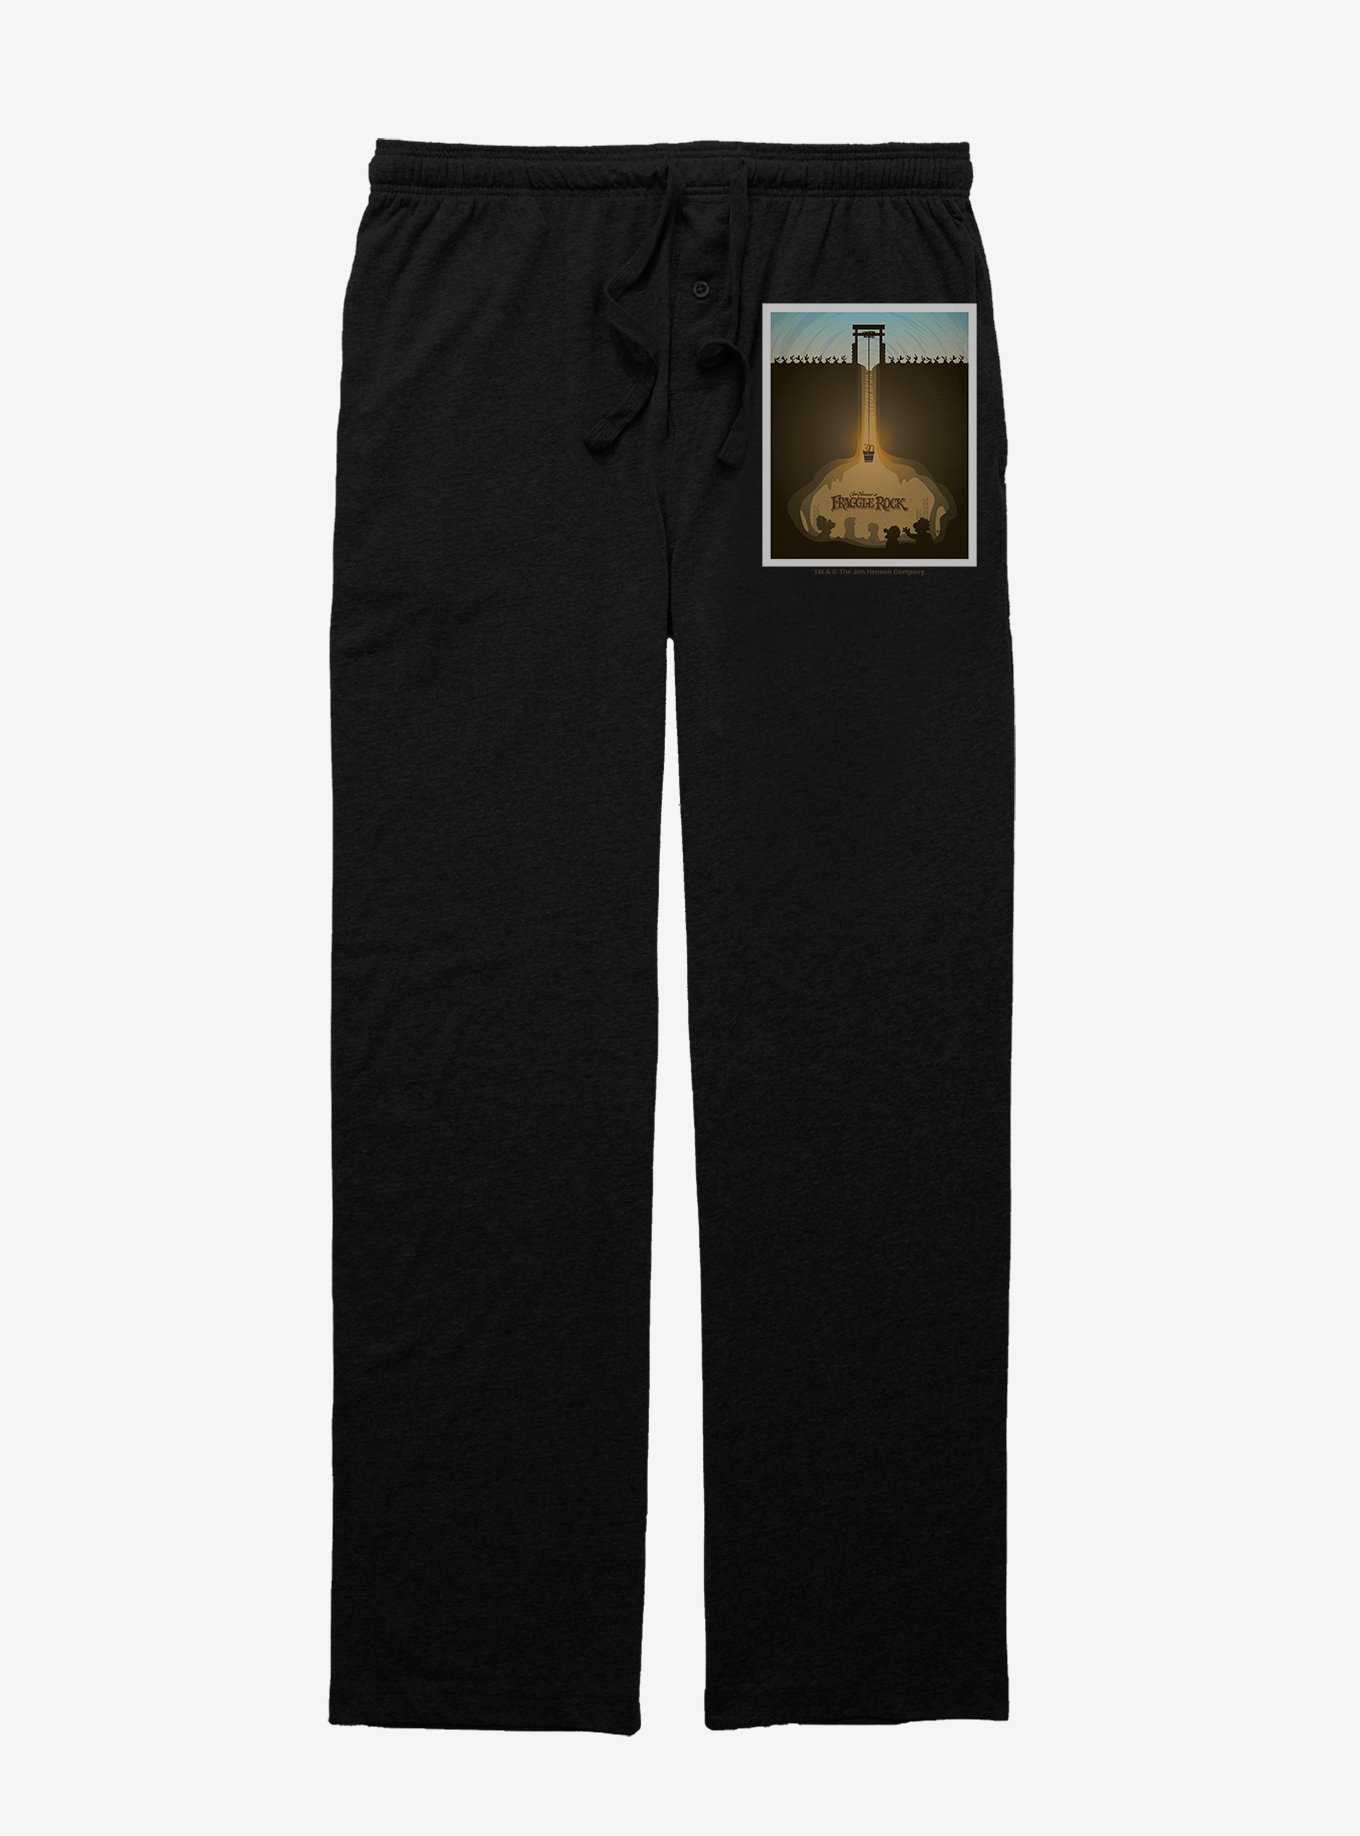 Jim Henson's Fraggle Rock Underground Pajama Pants, , hi-res